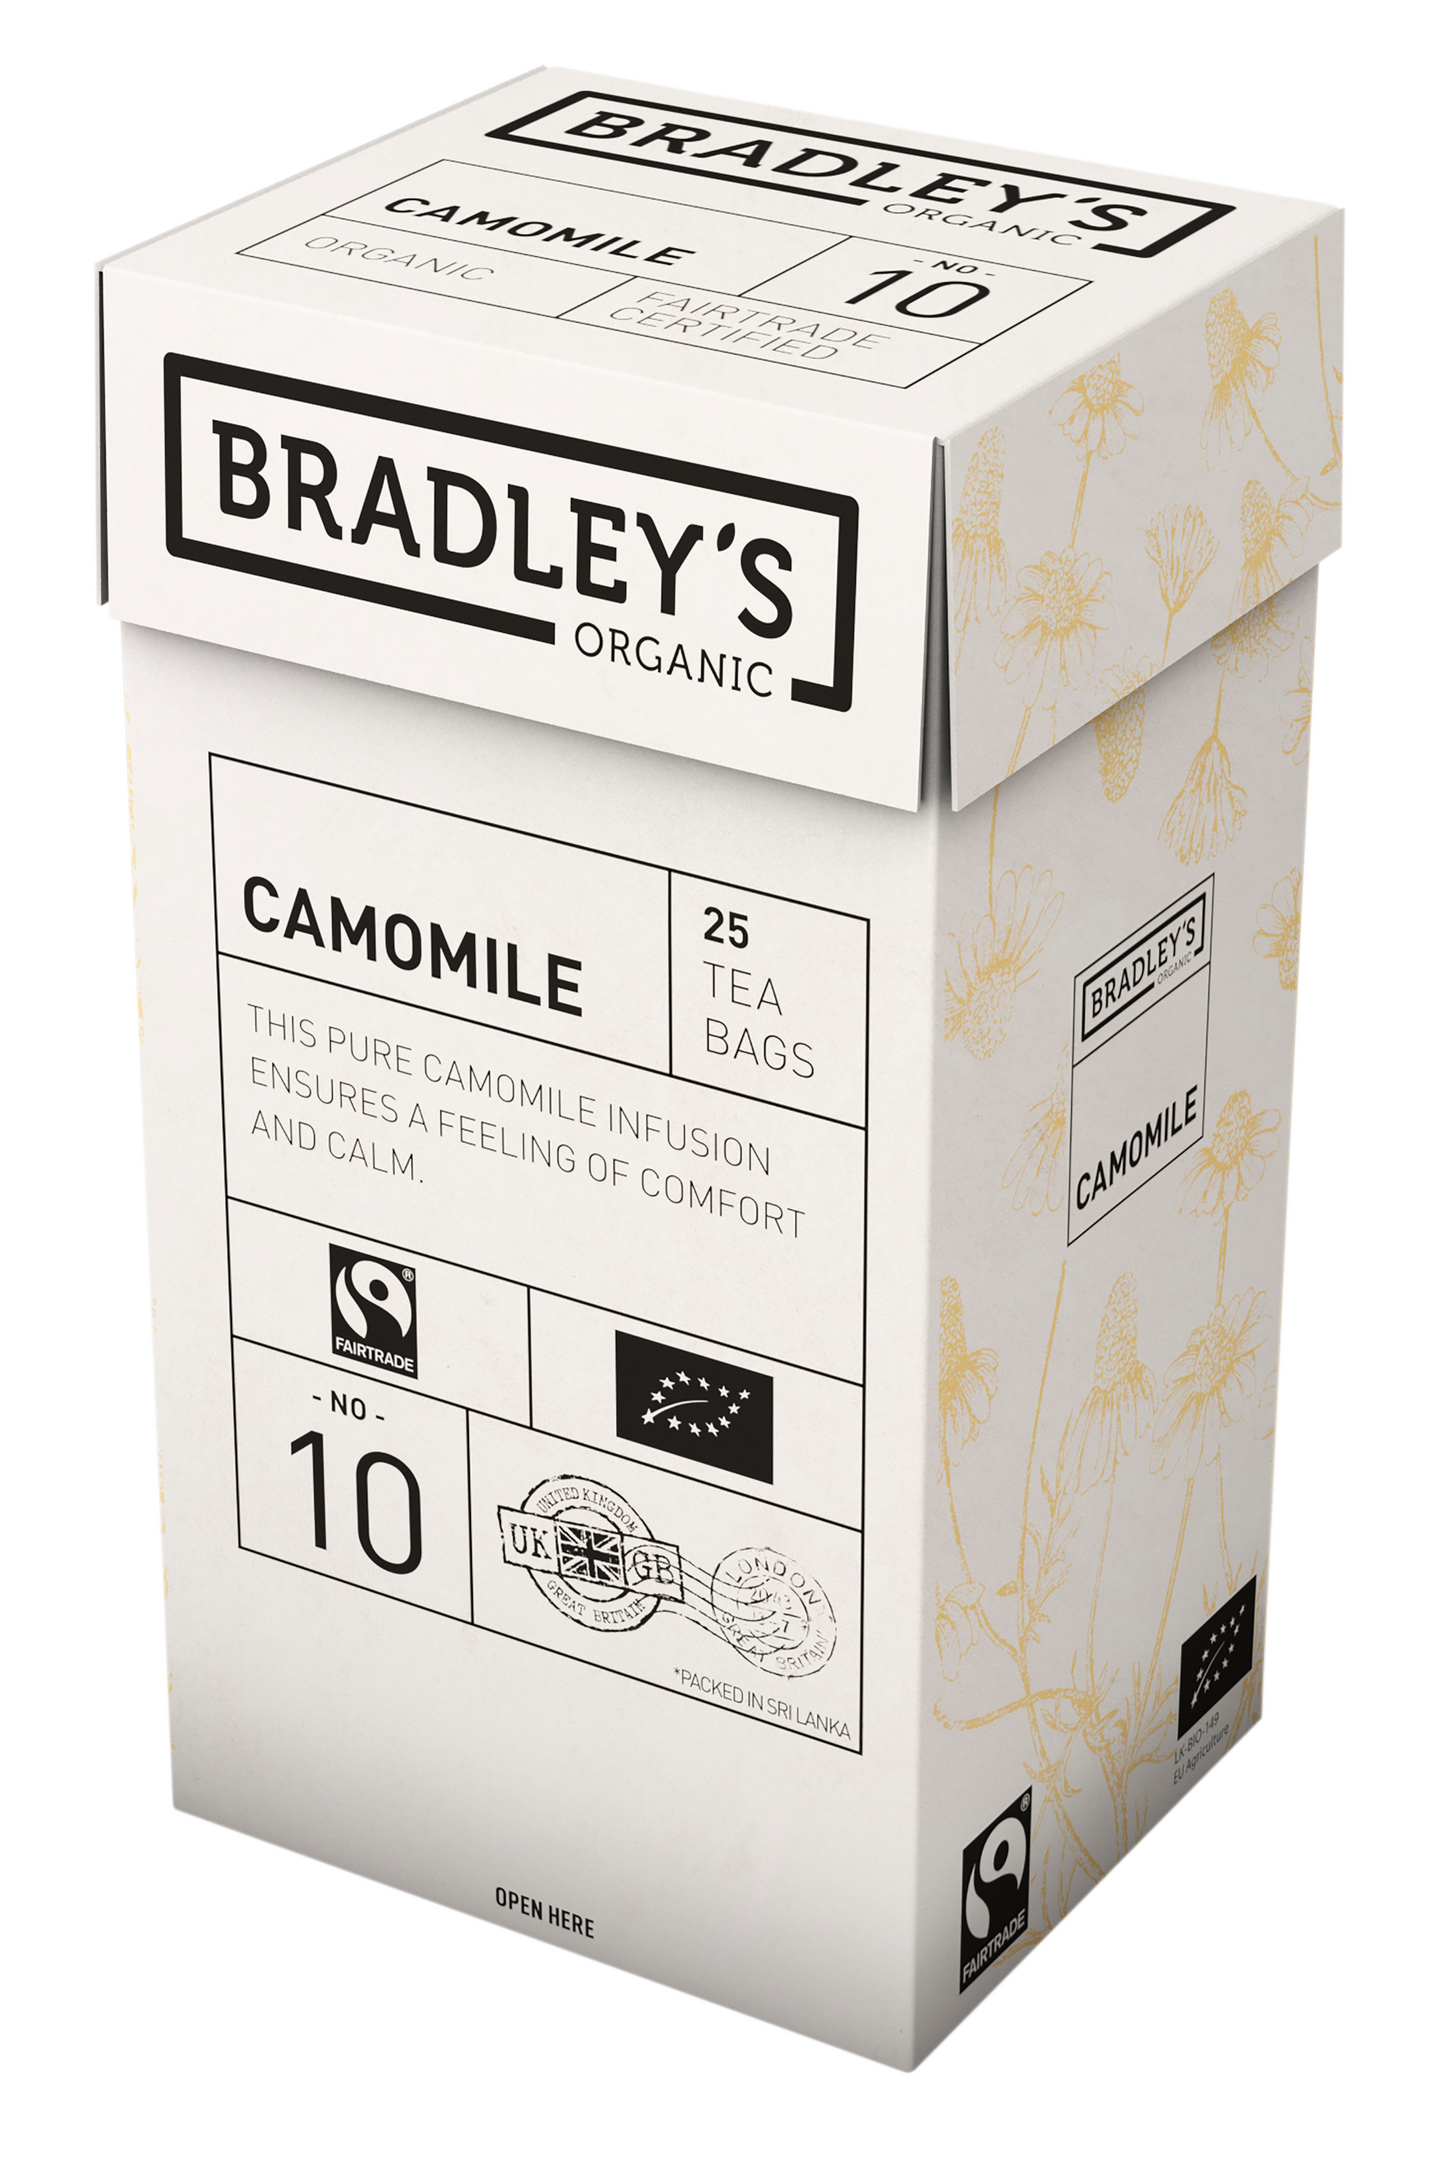 Bradley's Organic No. 10 kamomilla yrttihauduke 25kpl Luomu Reilun kaupan